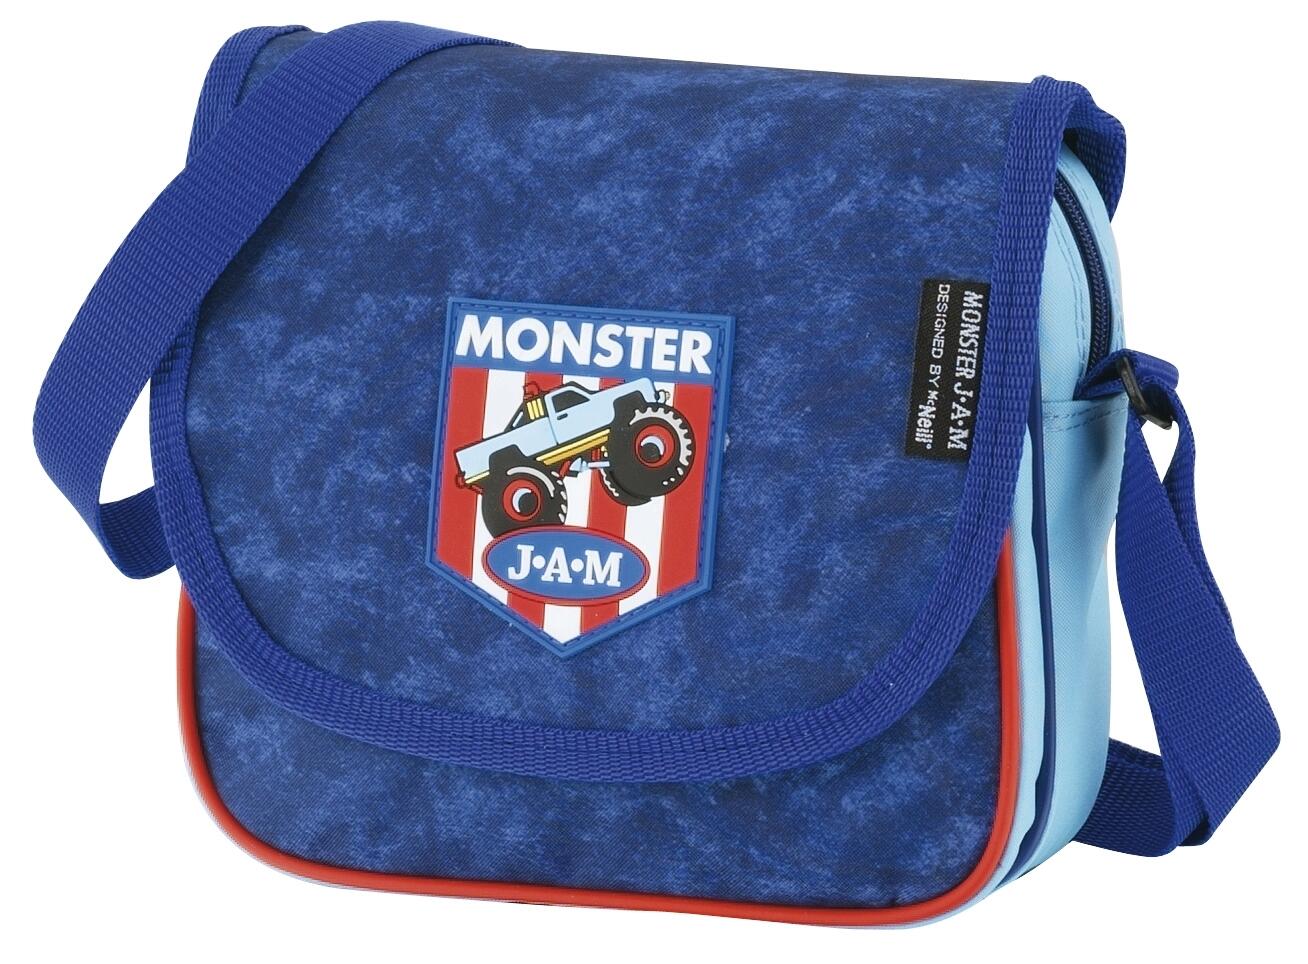 McNeill Kindergartentasche Monster Jam